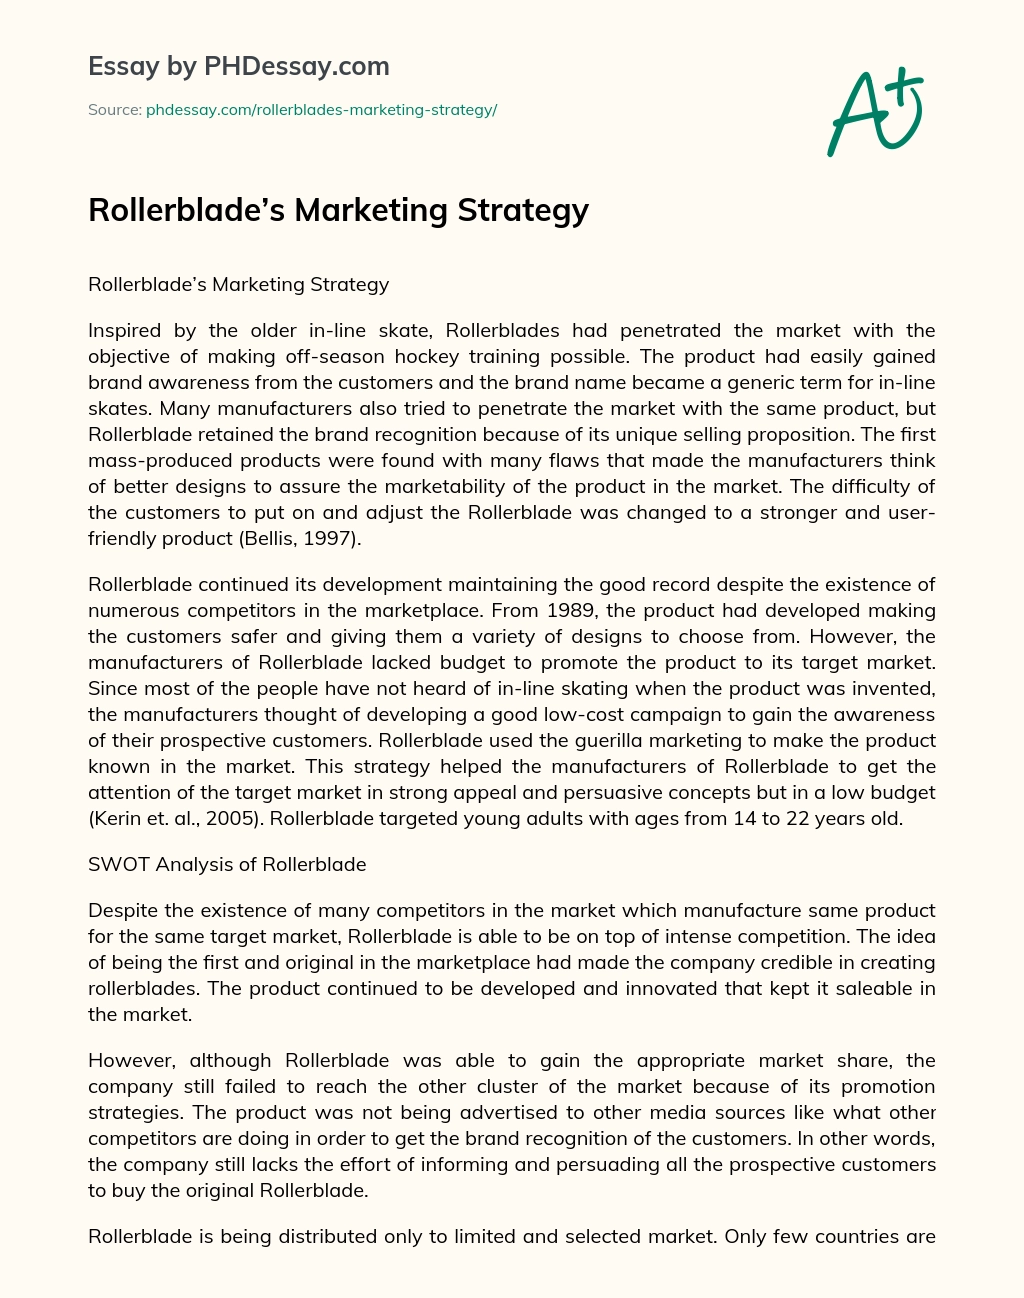 Rollerblade’s Marketing Strategy essay